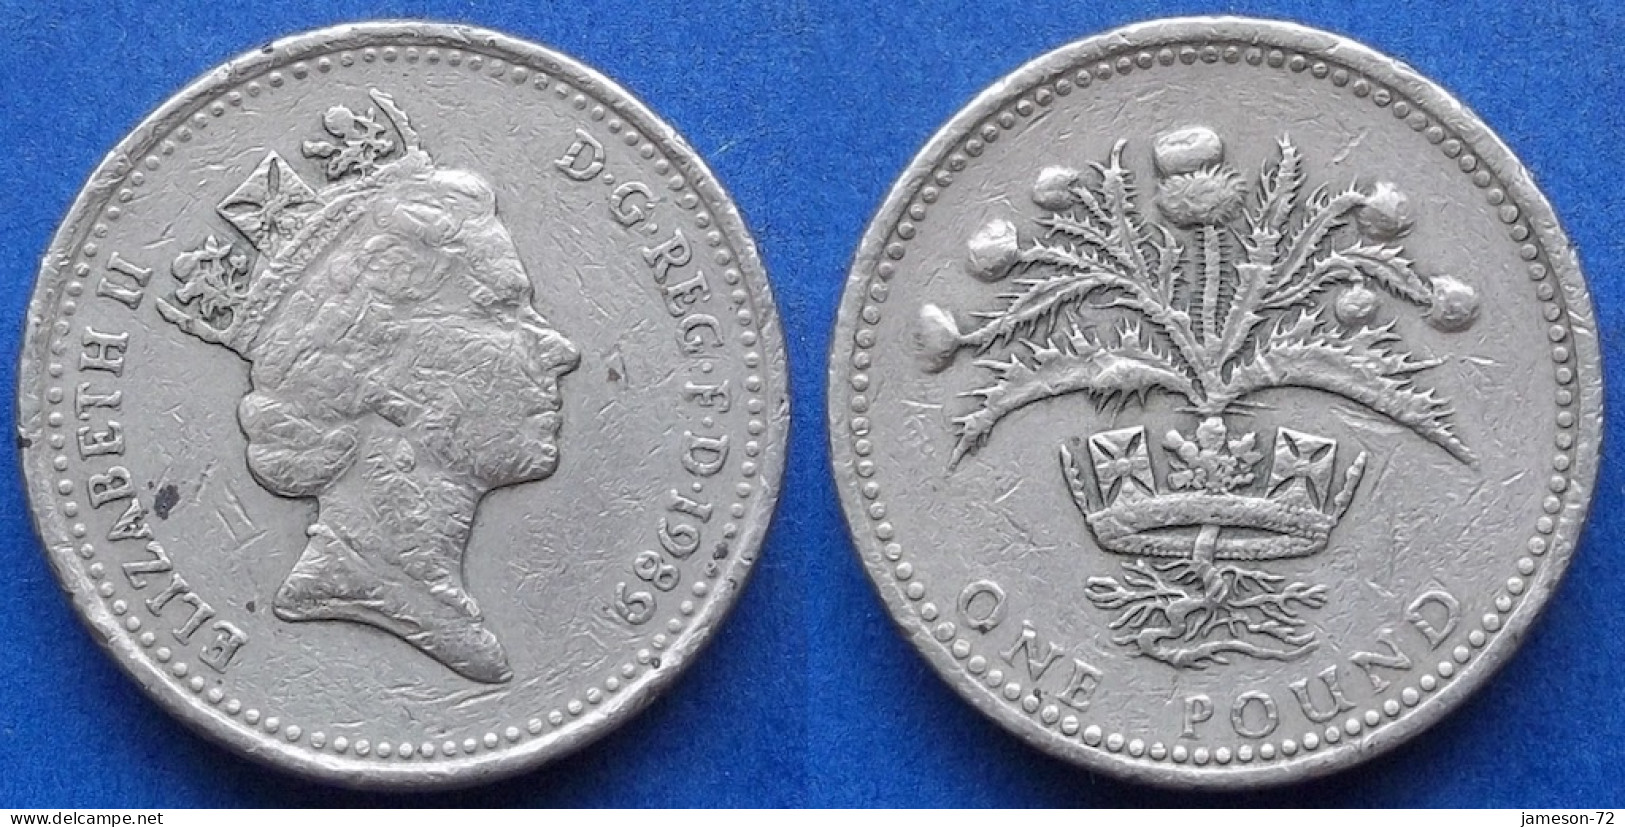 UK - 1 Pound 1989 "Scottish Thistle" KM# 959 Elizabeth II Decimal Coinage (1971-2022) - Edelweiss Coins - 1 Pound